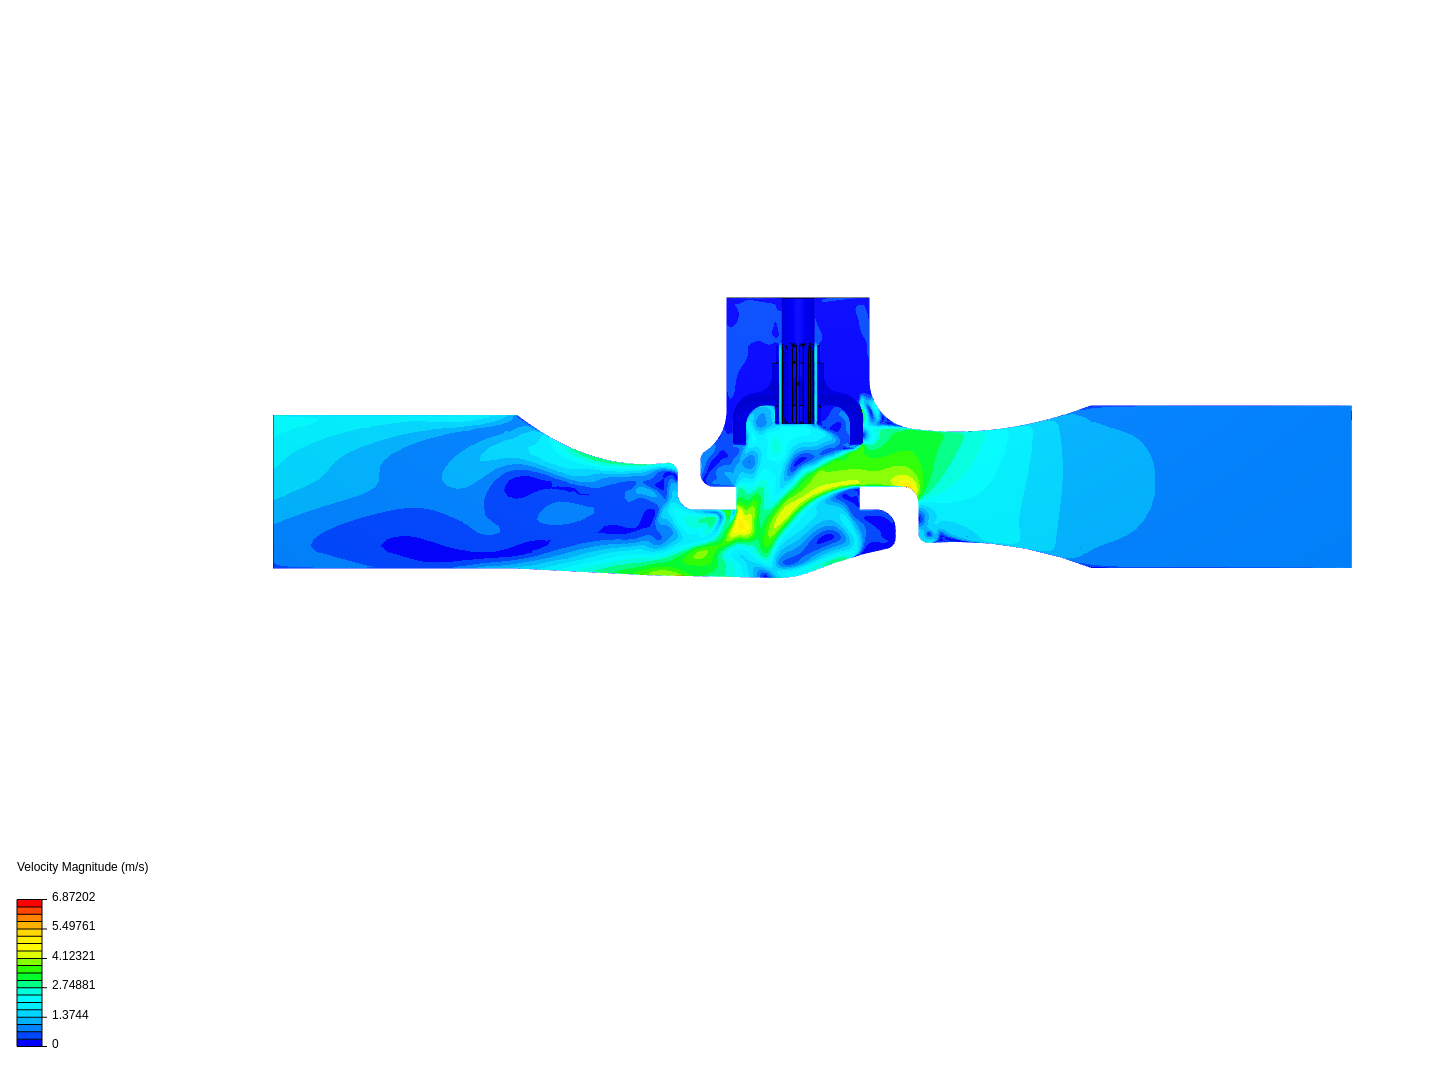 globe valve simulation practice image